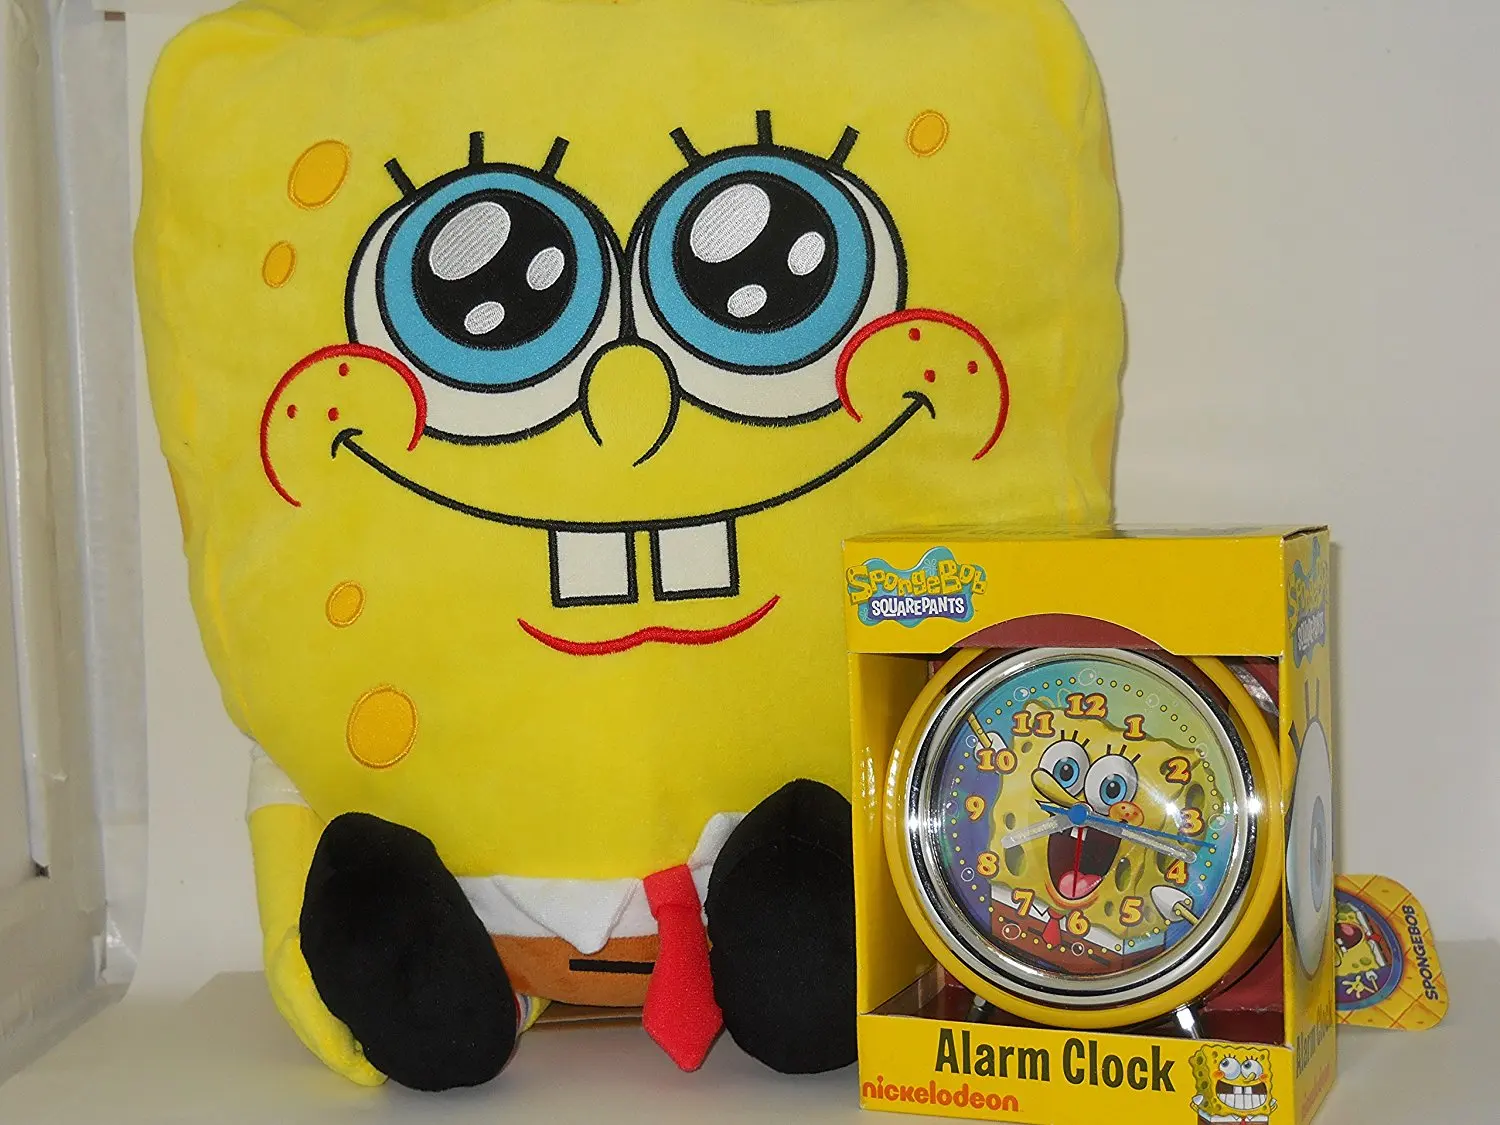 life size spongebob stuffed